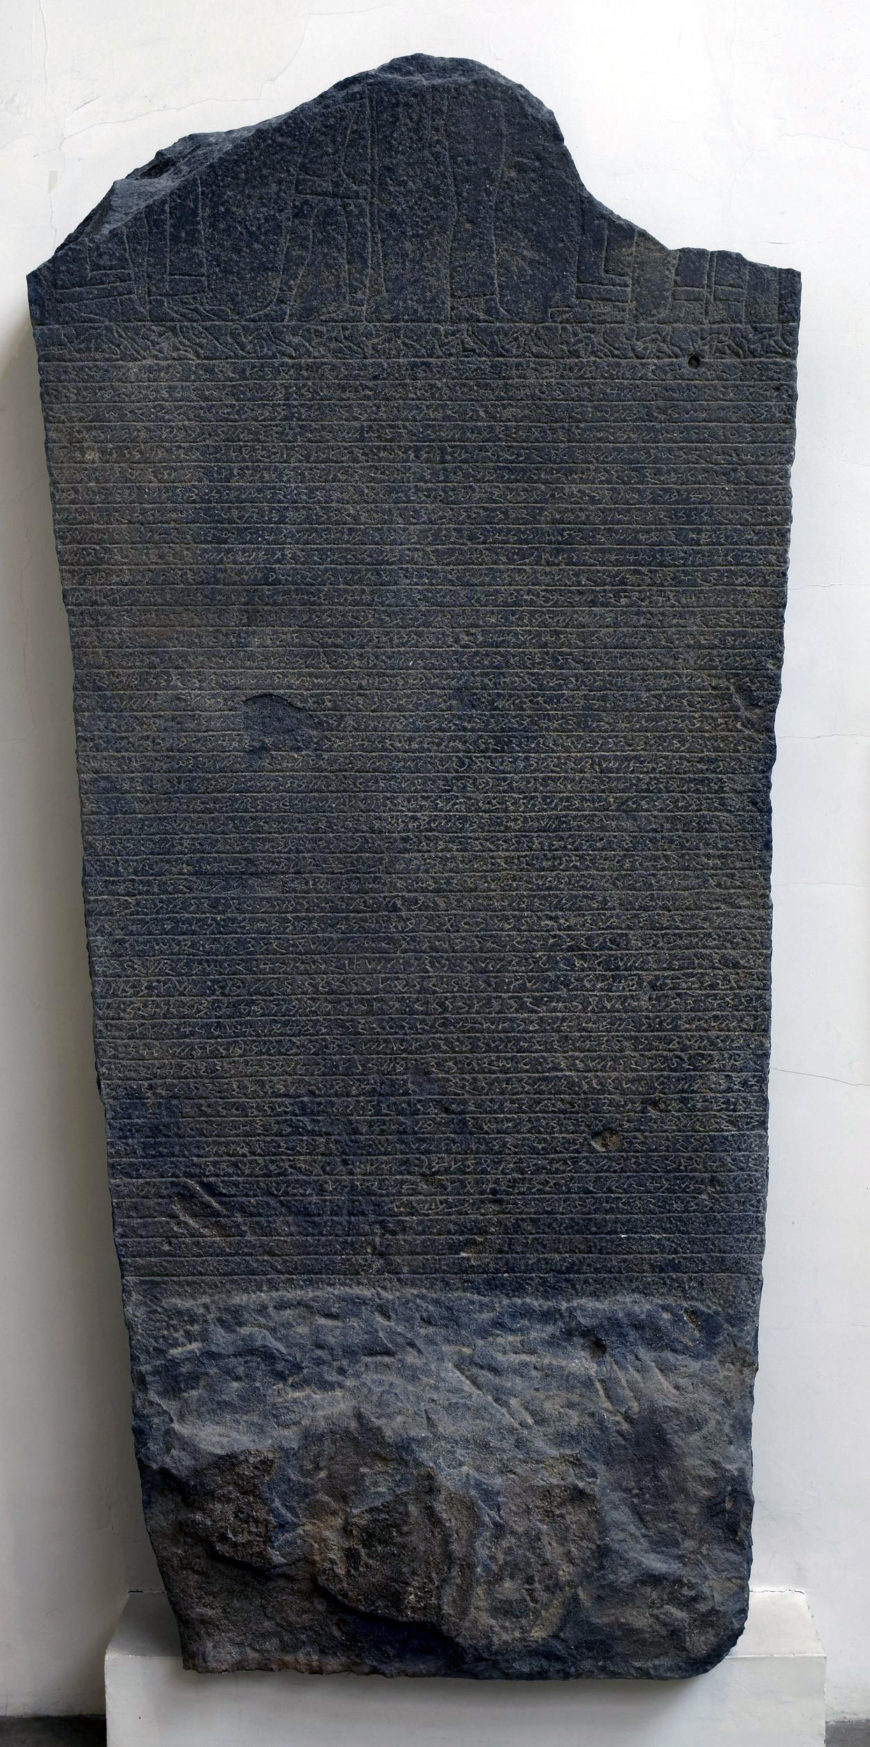 Meroitic stela From Hamadab, Sudan Kushite period, about 24BC, Height: 236.5 cm